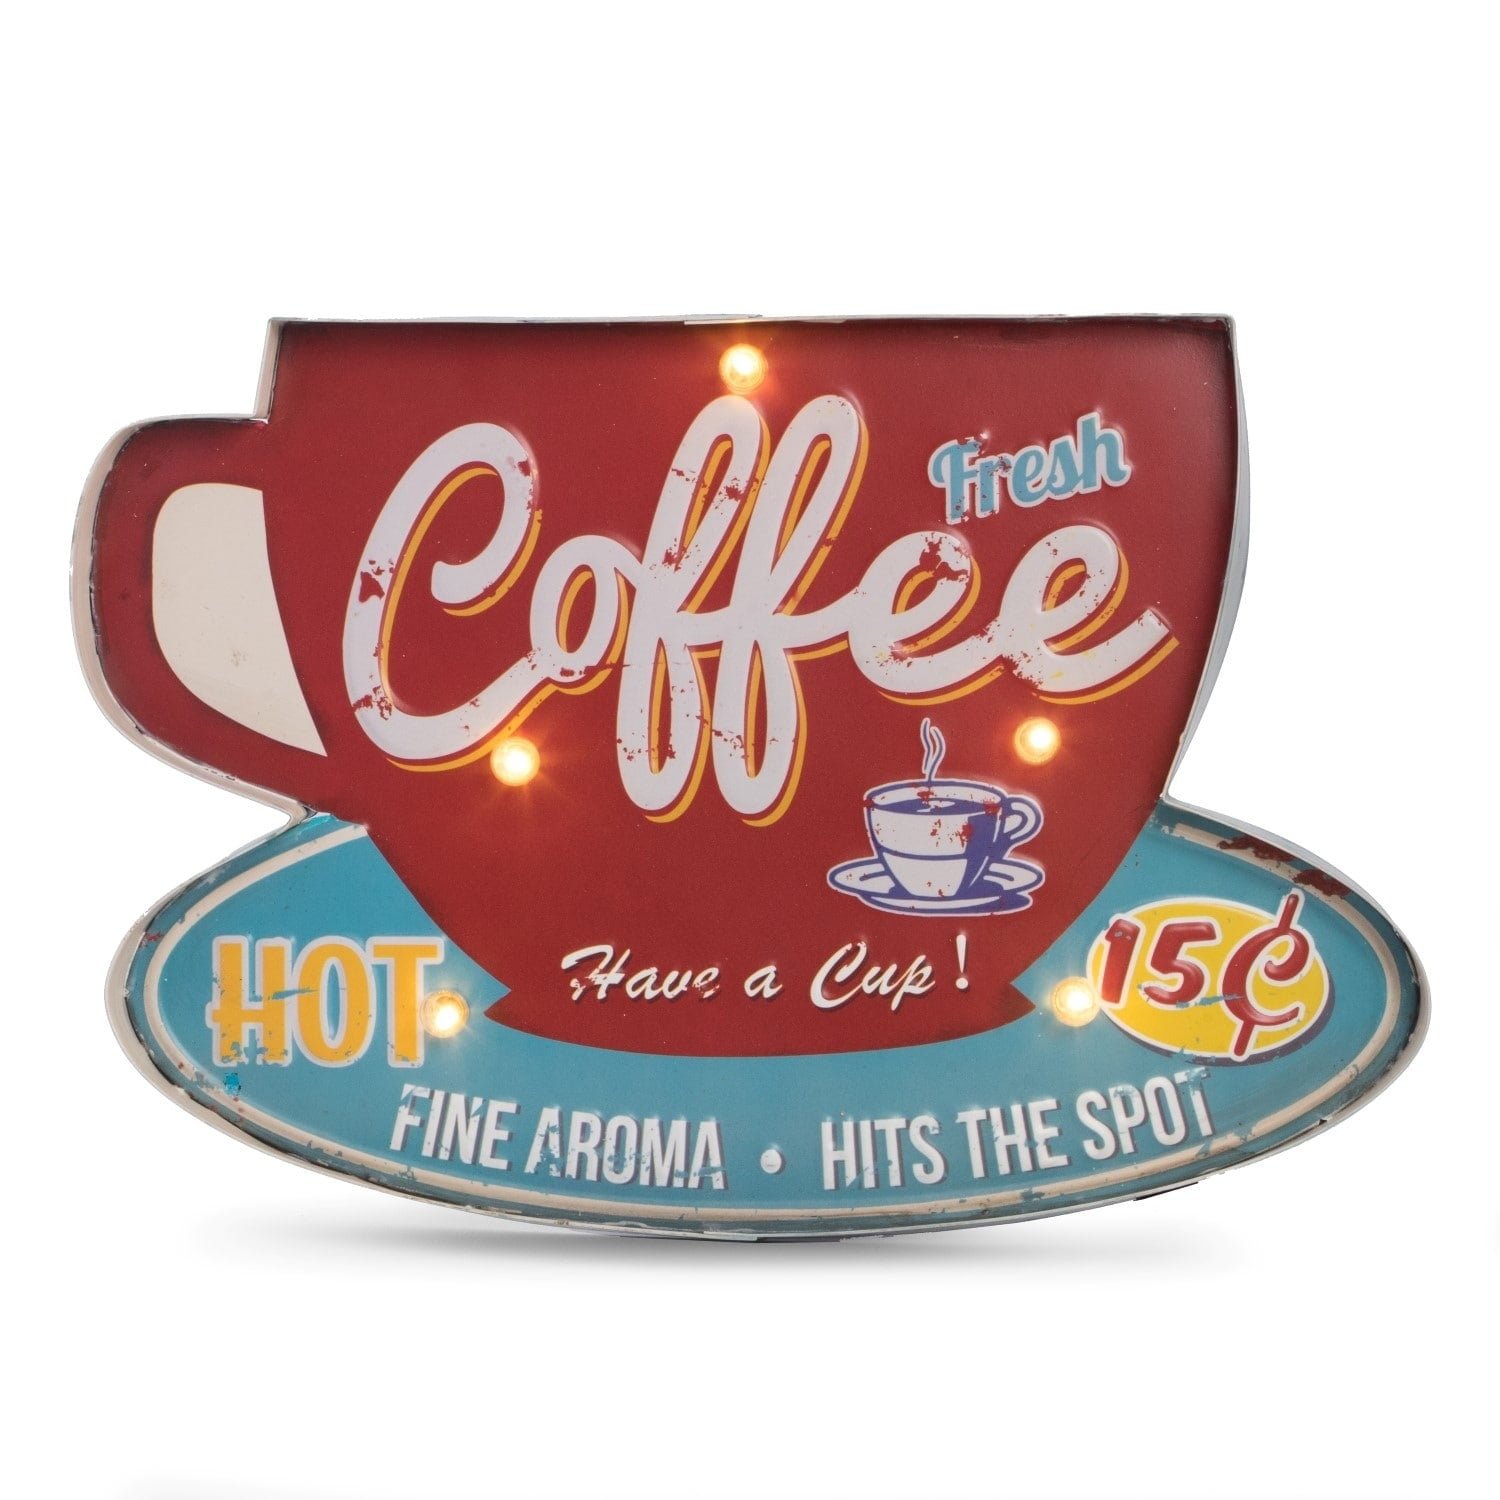 Bey-berk International Wd504 Coffee Led Lighted Metal Sign - Multi Color